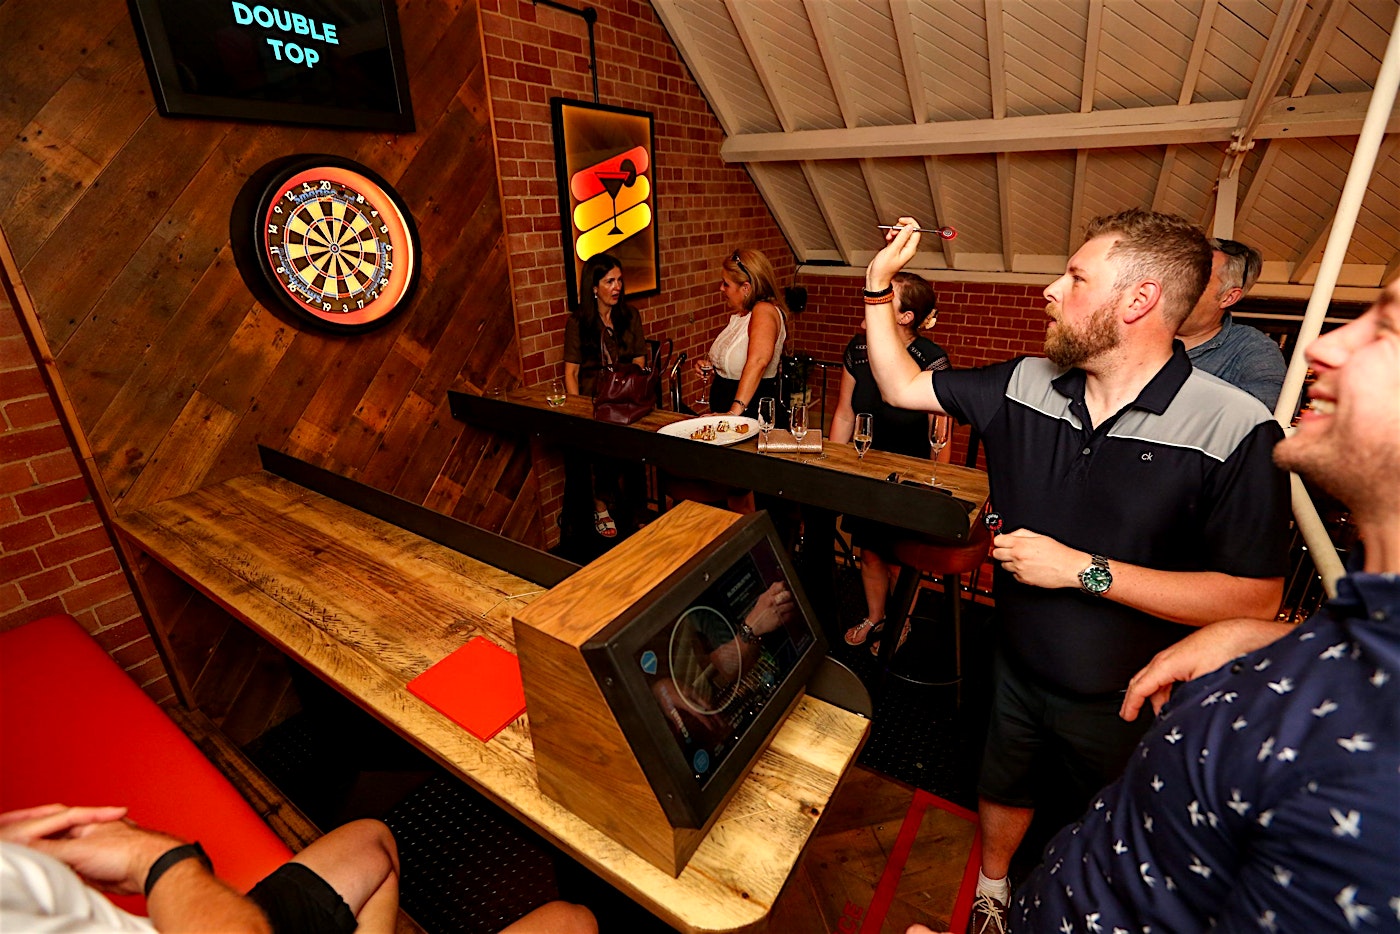 people playing darts at 180 darts club at austrin friars balls brothers city of london team-building activity venue